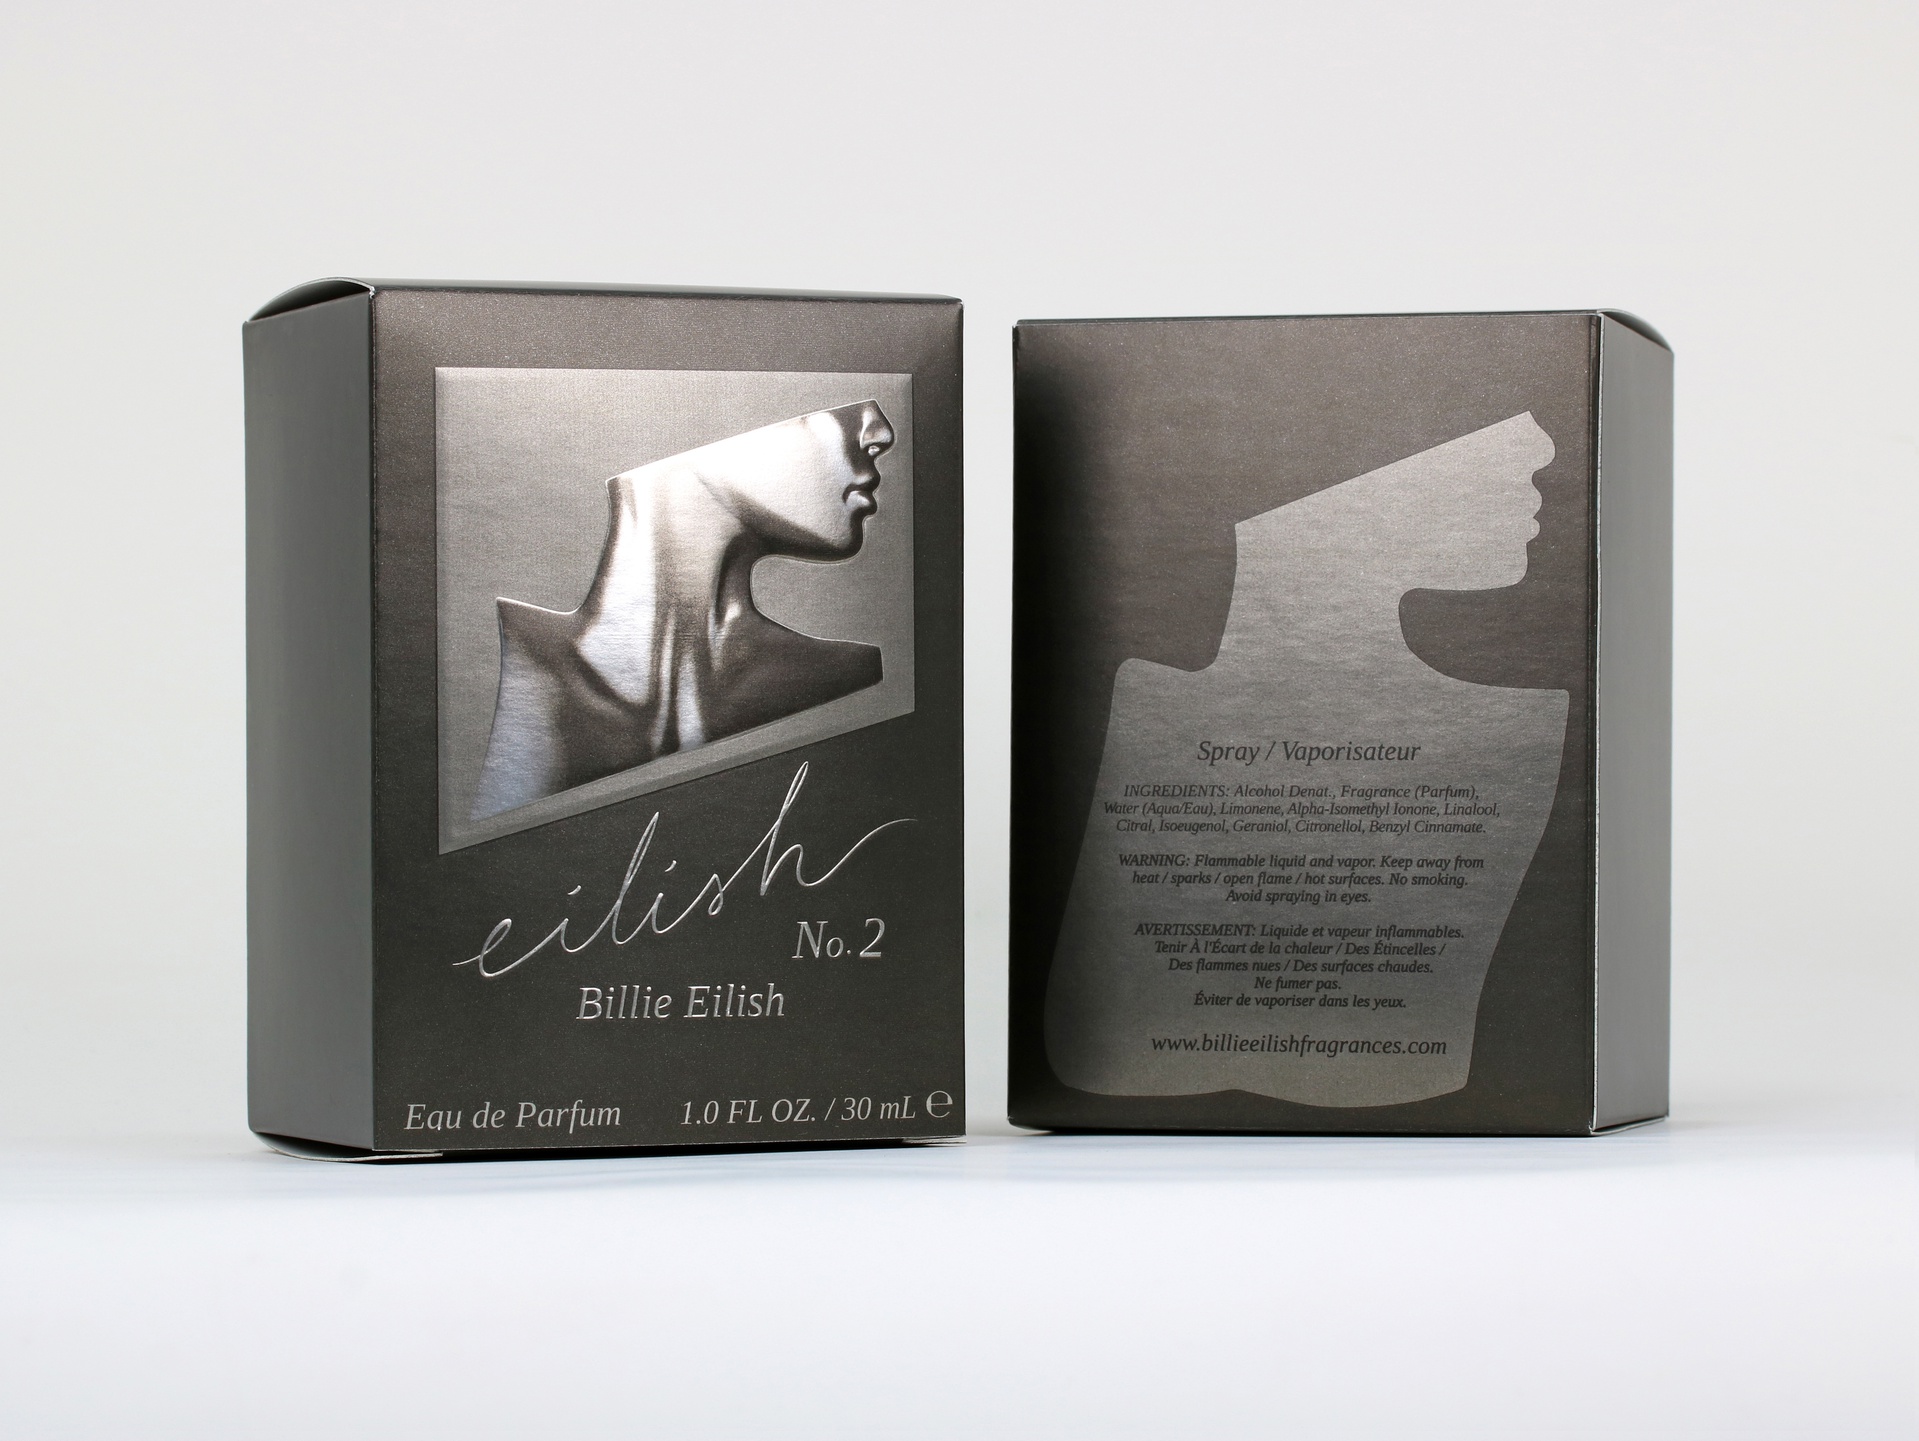 Billie Eilish No. 2 fragrance packaging